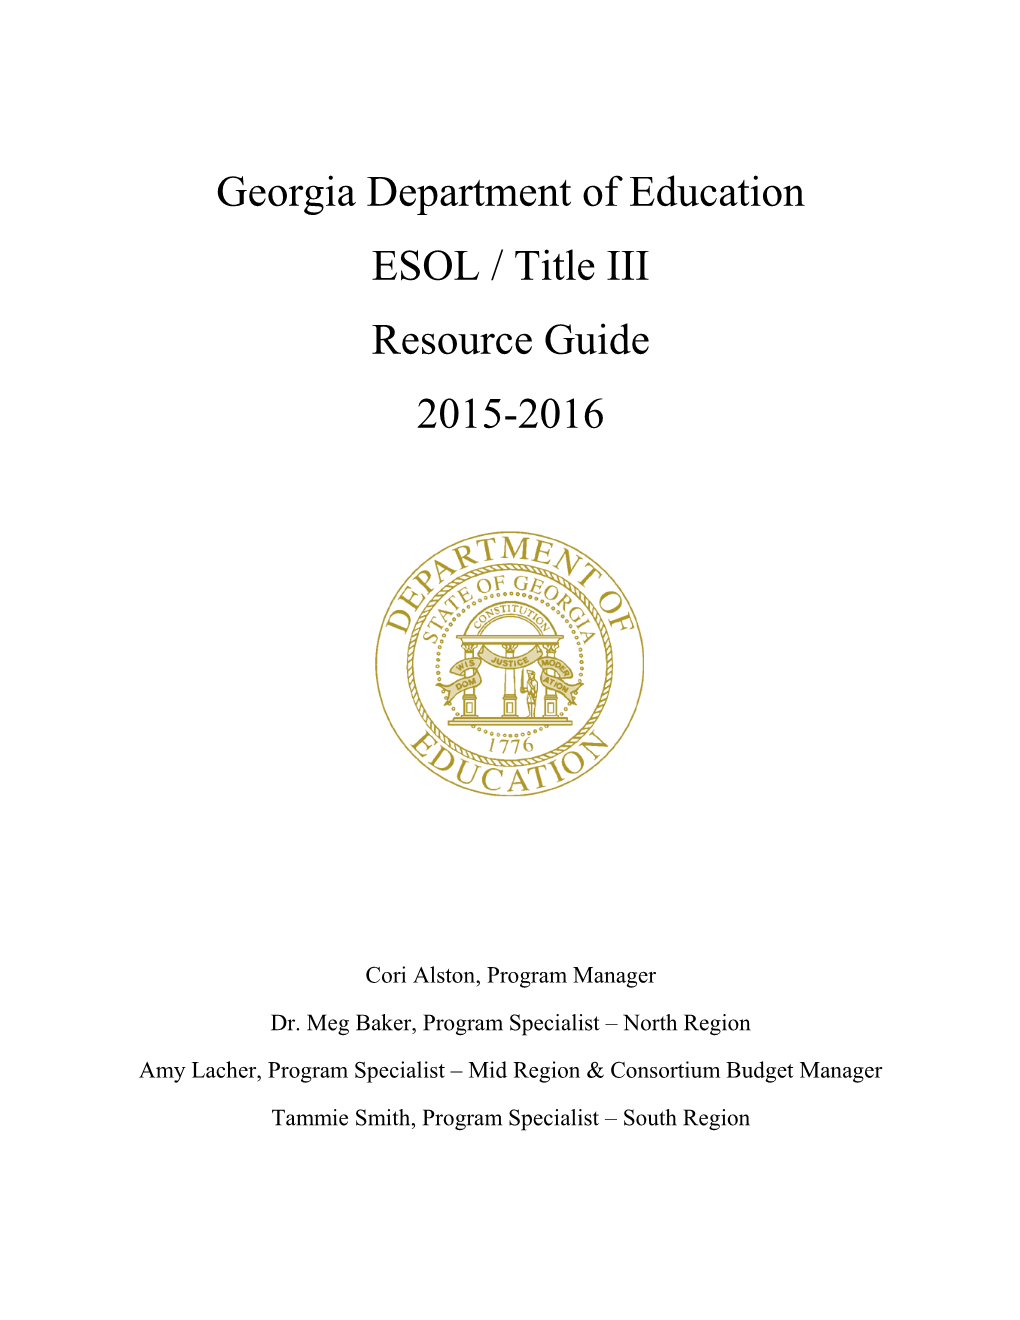 Georgia Department of Education ESOL / Title III Resource Guide 2015-2016